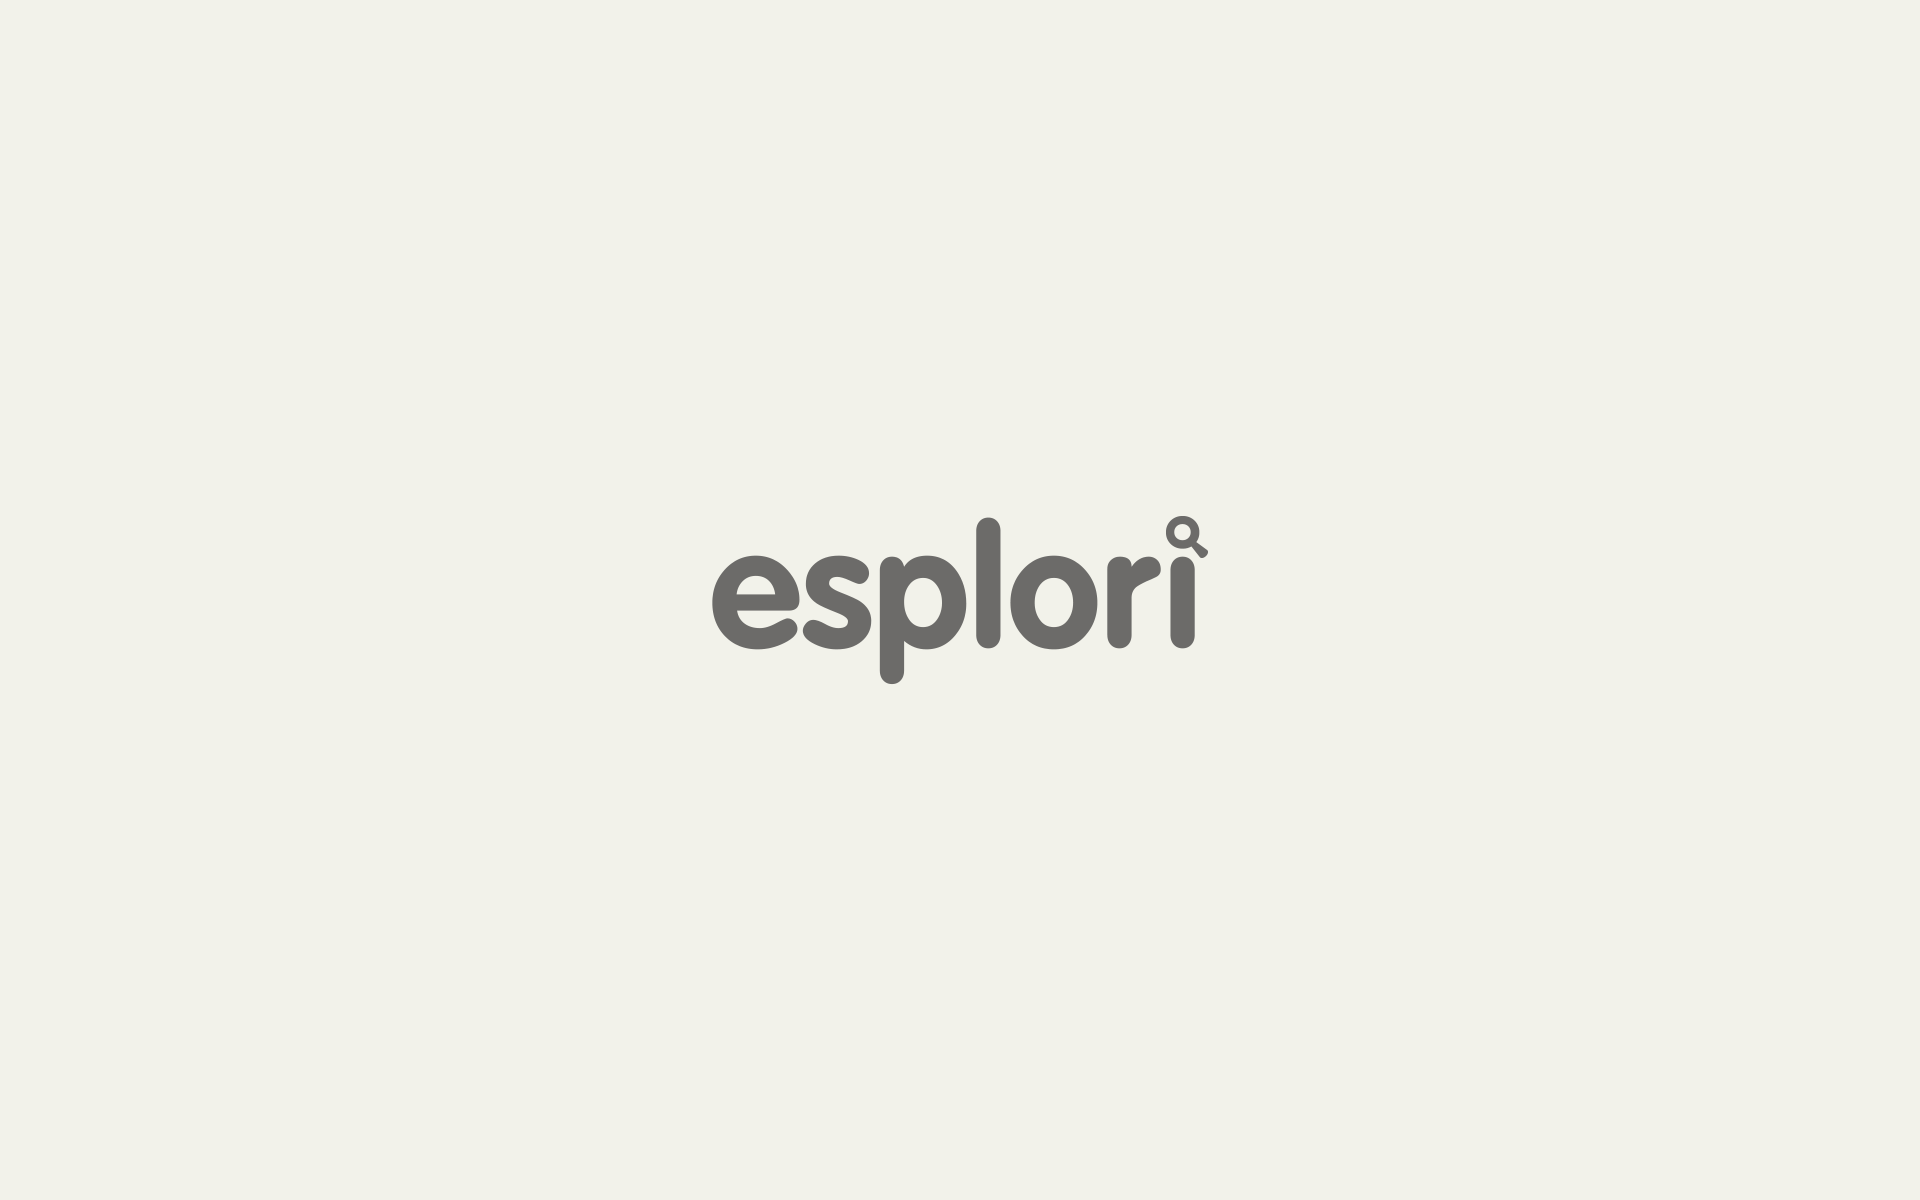 esplori - a touch-friendly file explorer